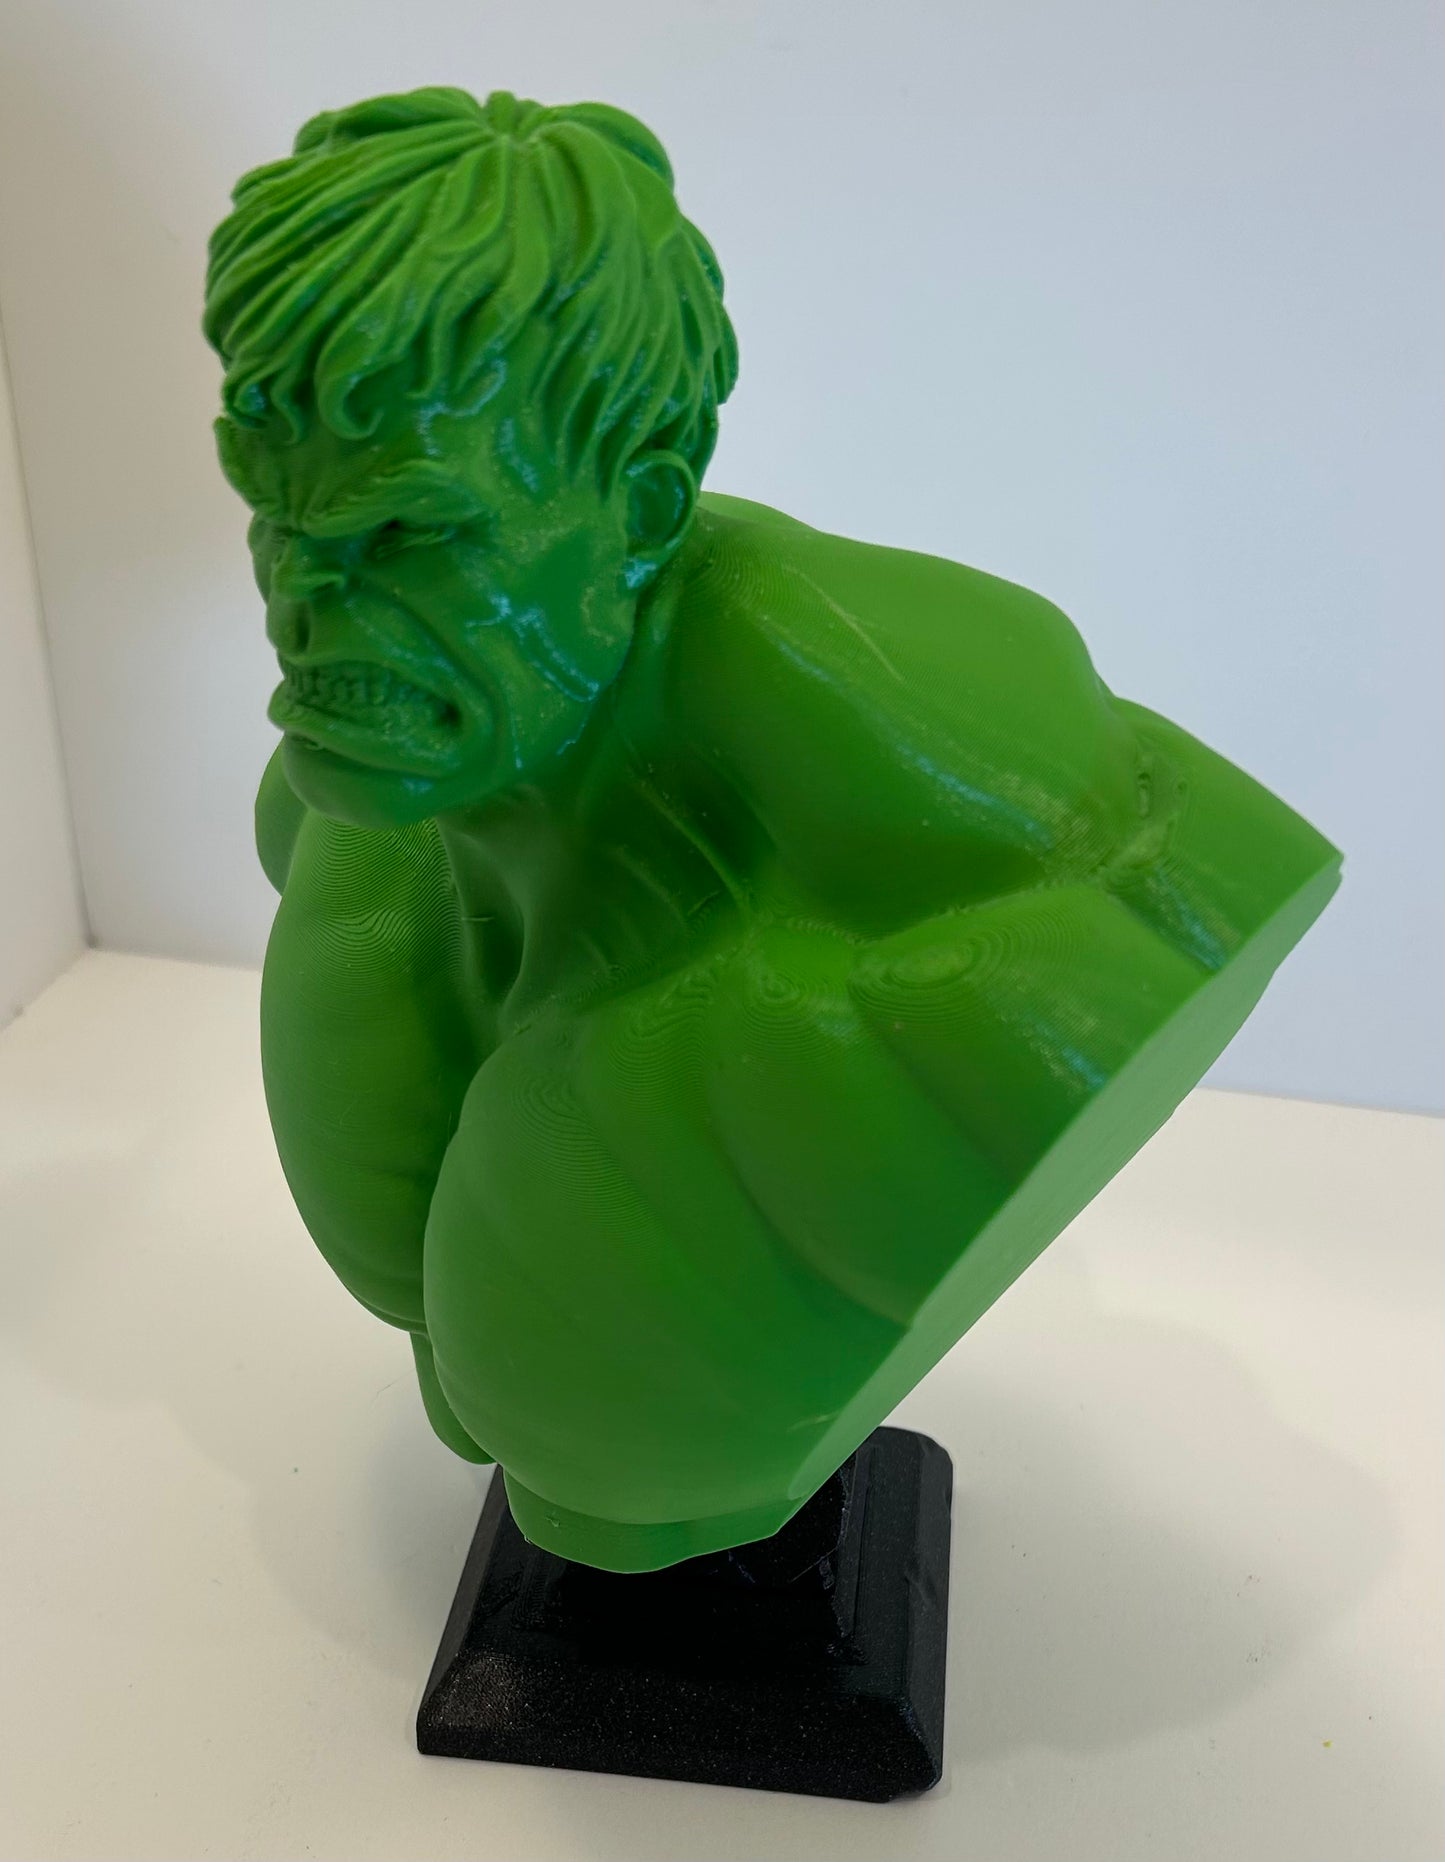 Incredible Hulk bust